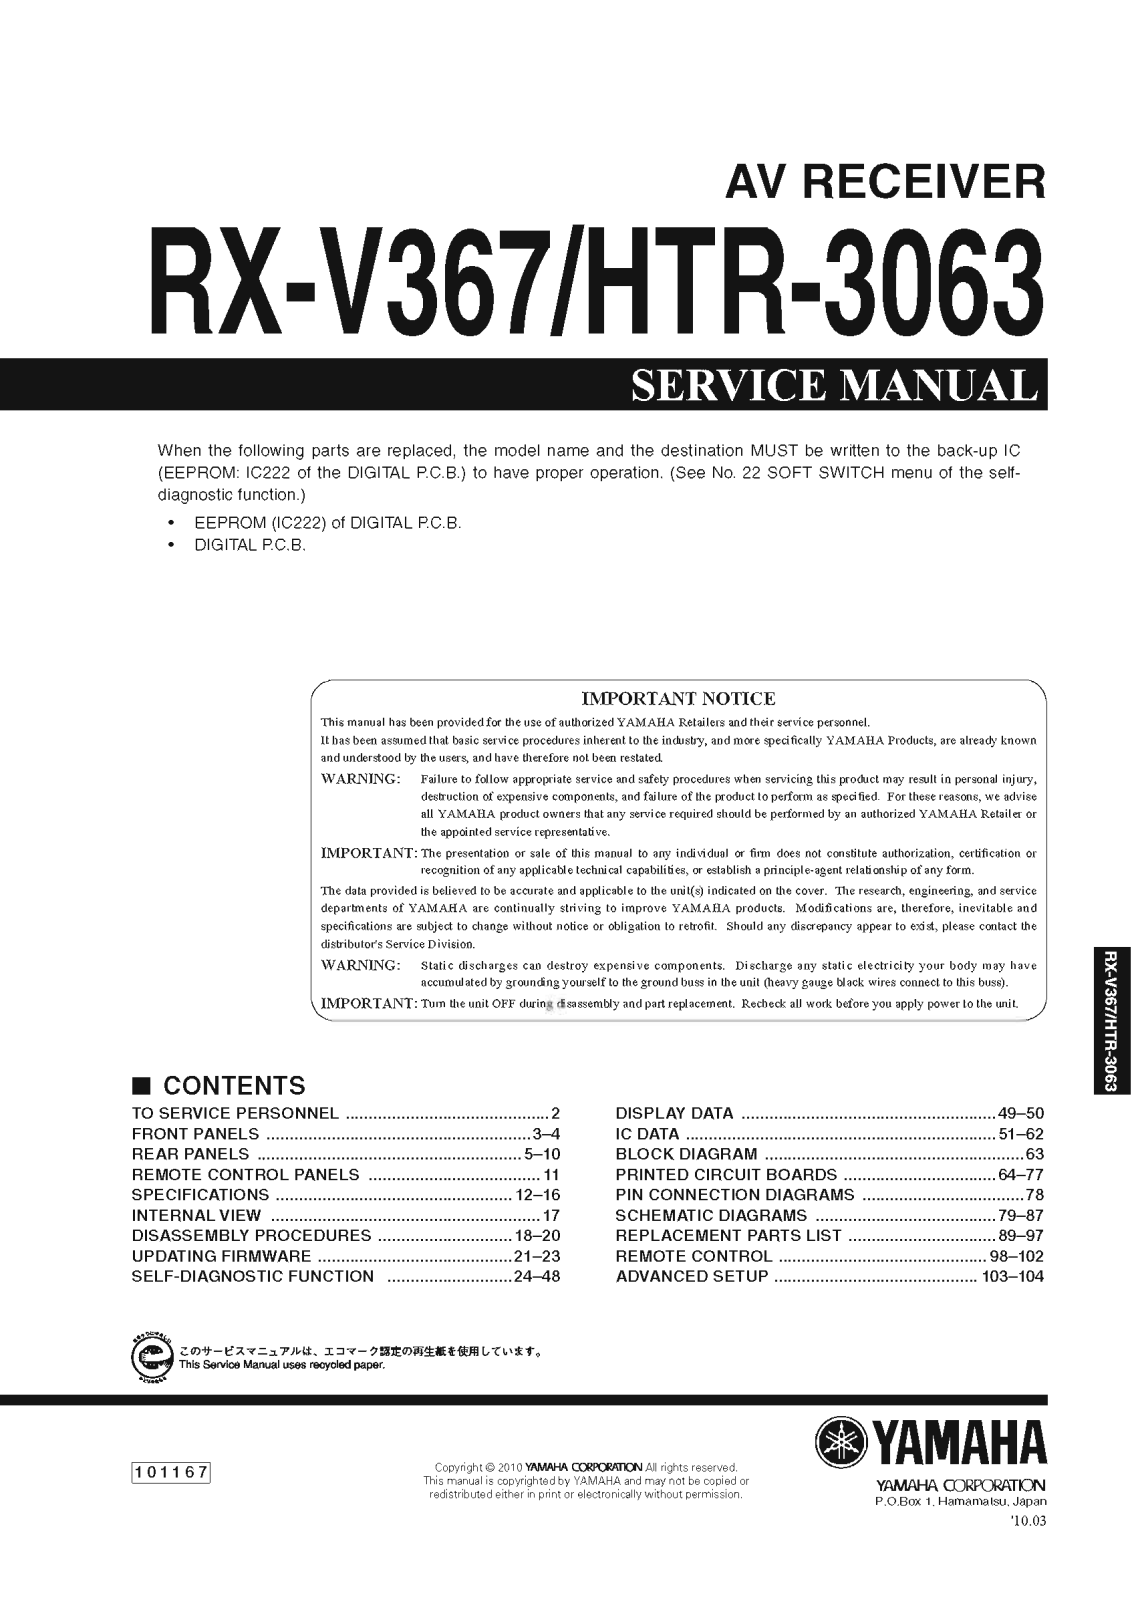 Yamaha HTR-3063 Service Manual